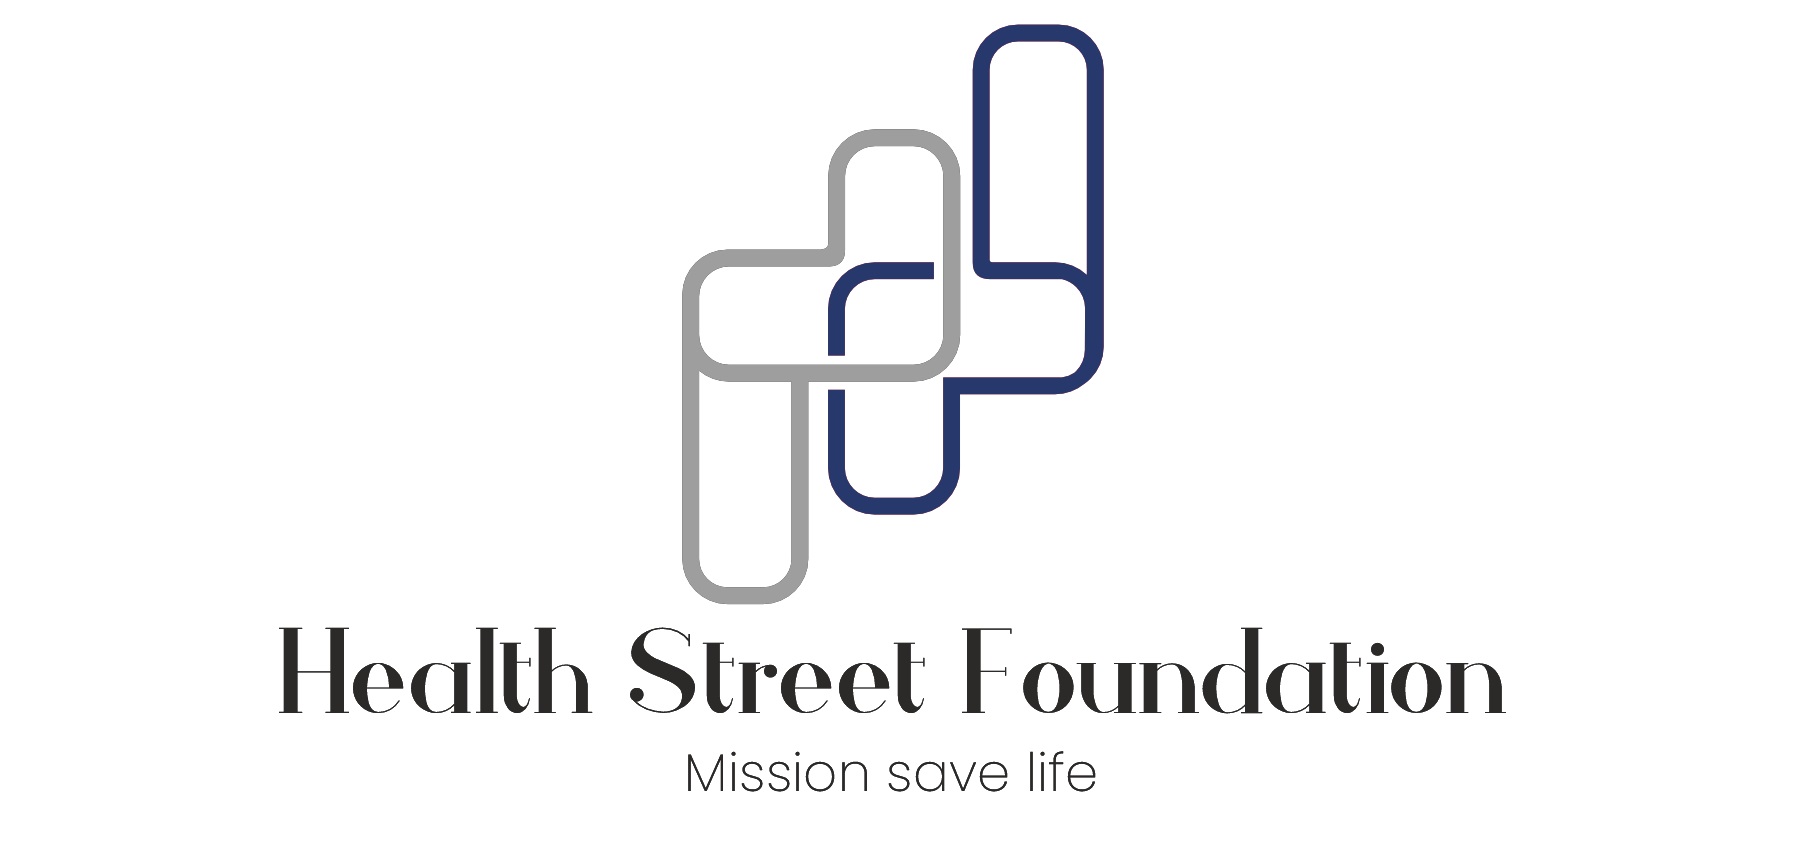 Charitable NGO Health Street Foundation